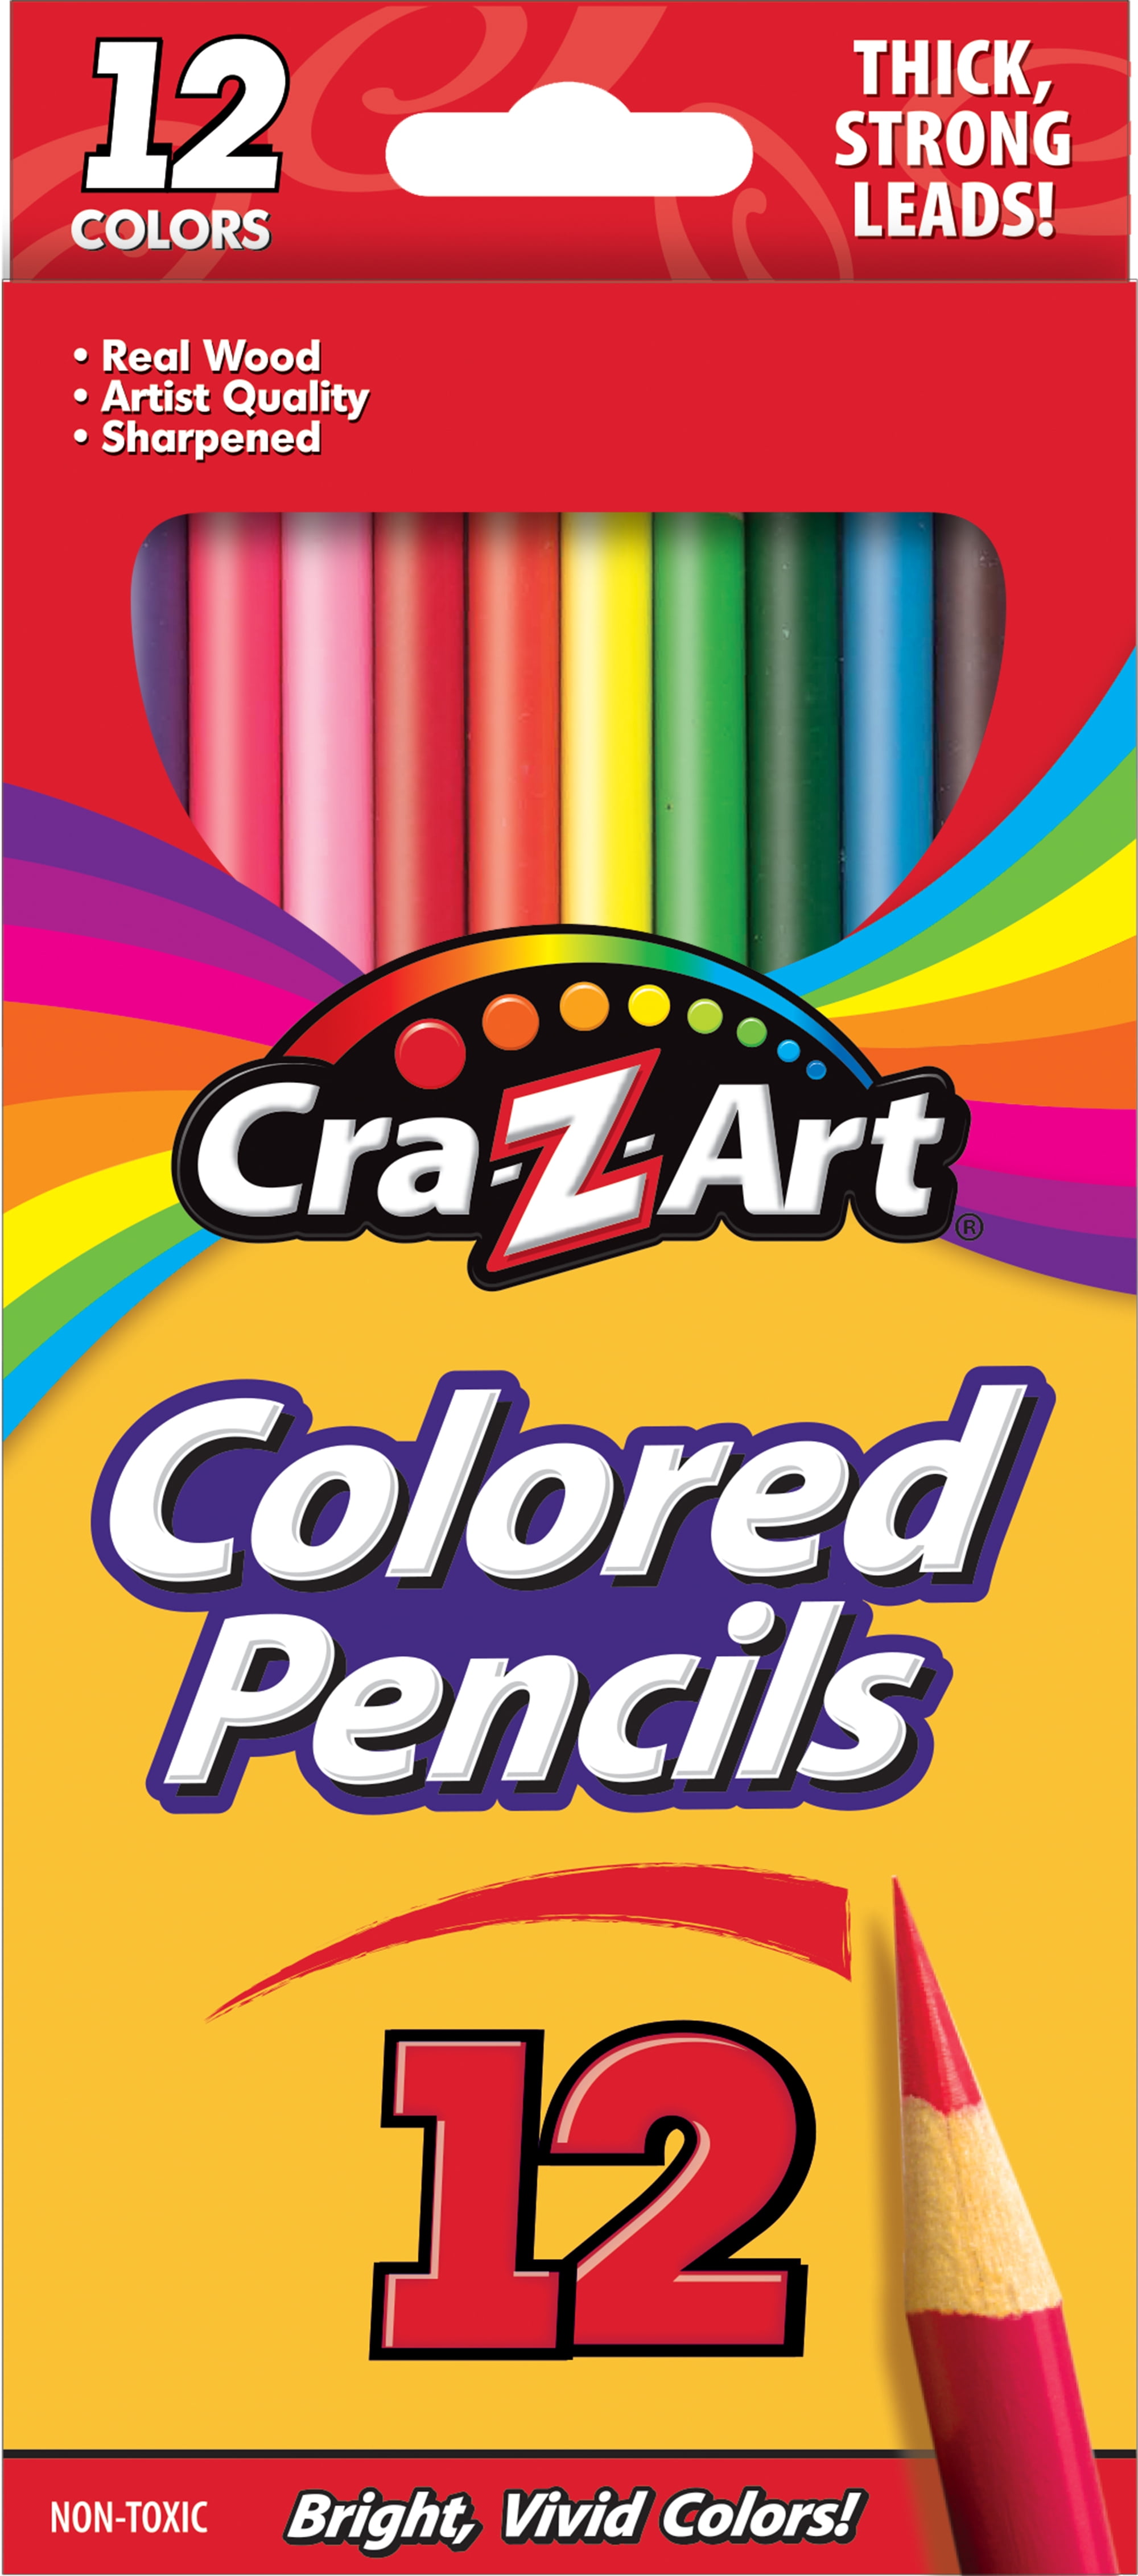 Cra-Z-Art Colored Pencils, 72 count